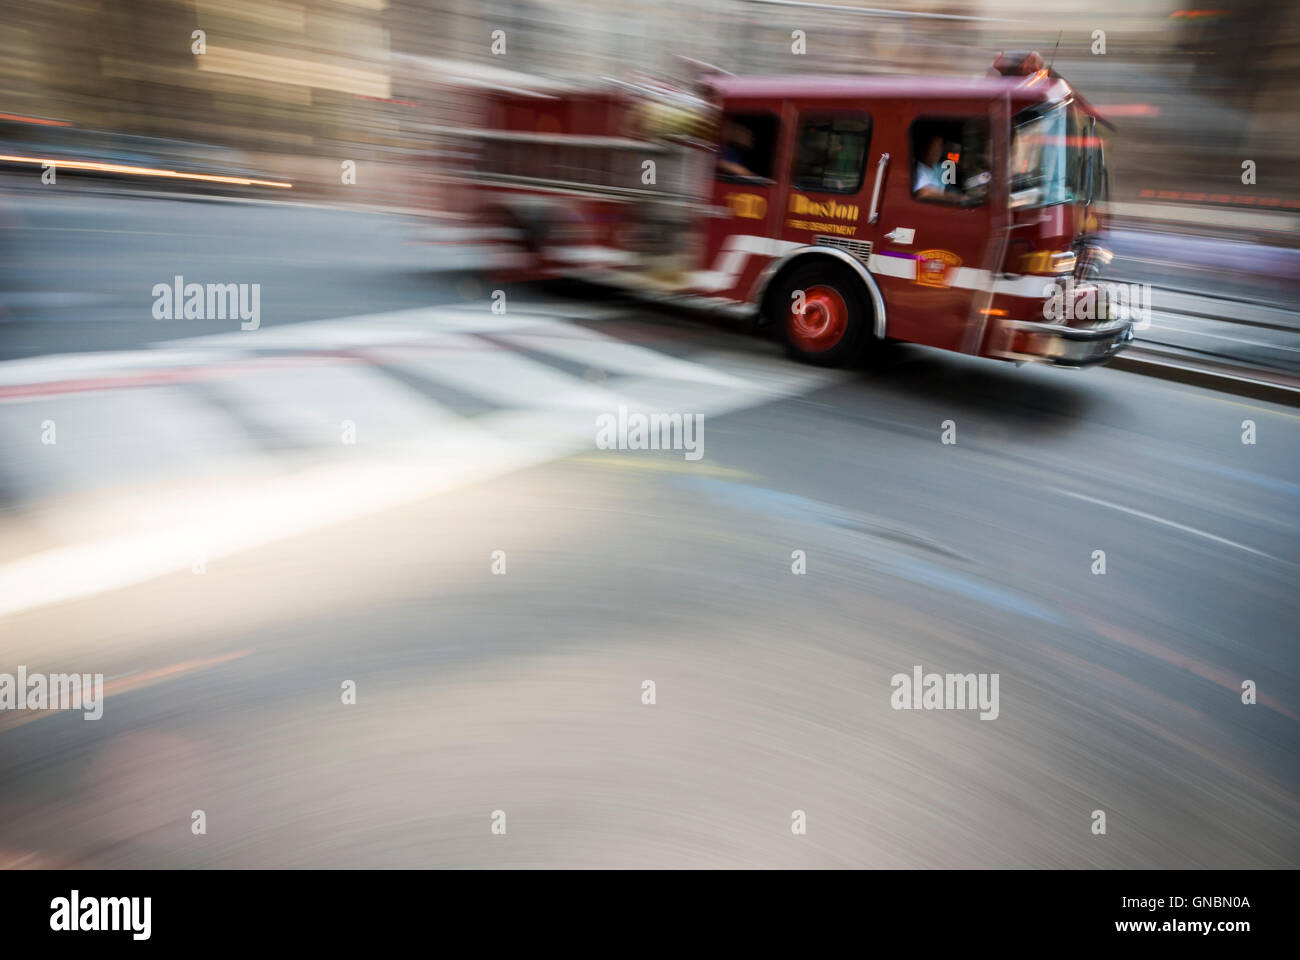 Boston fire truck high speed Stock Photo